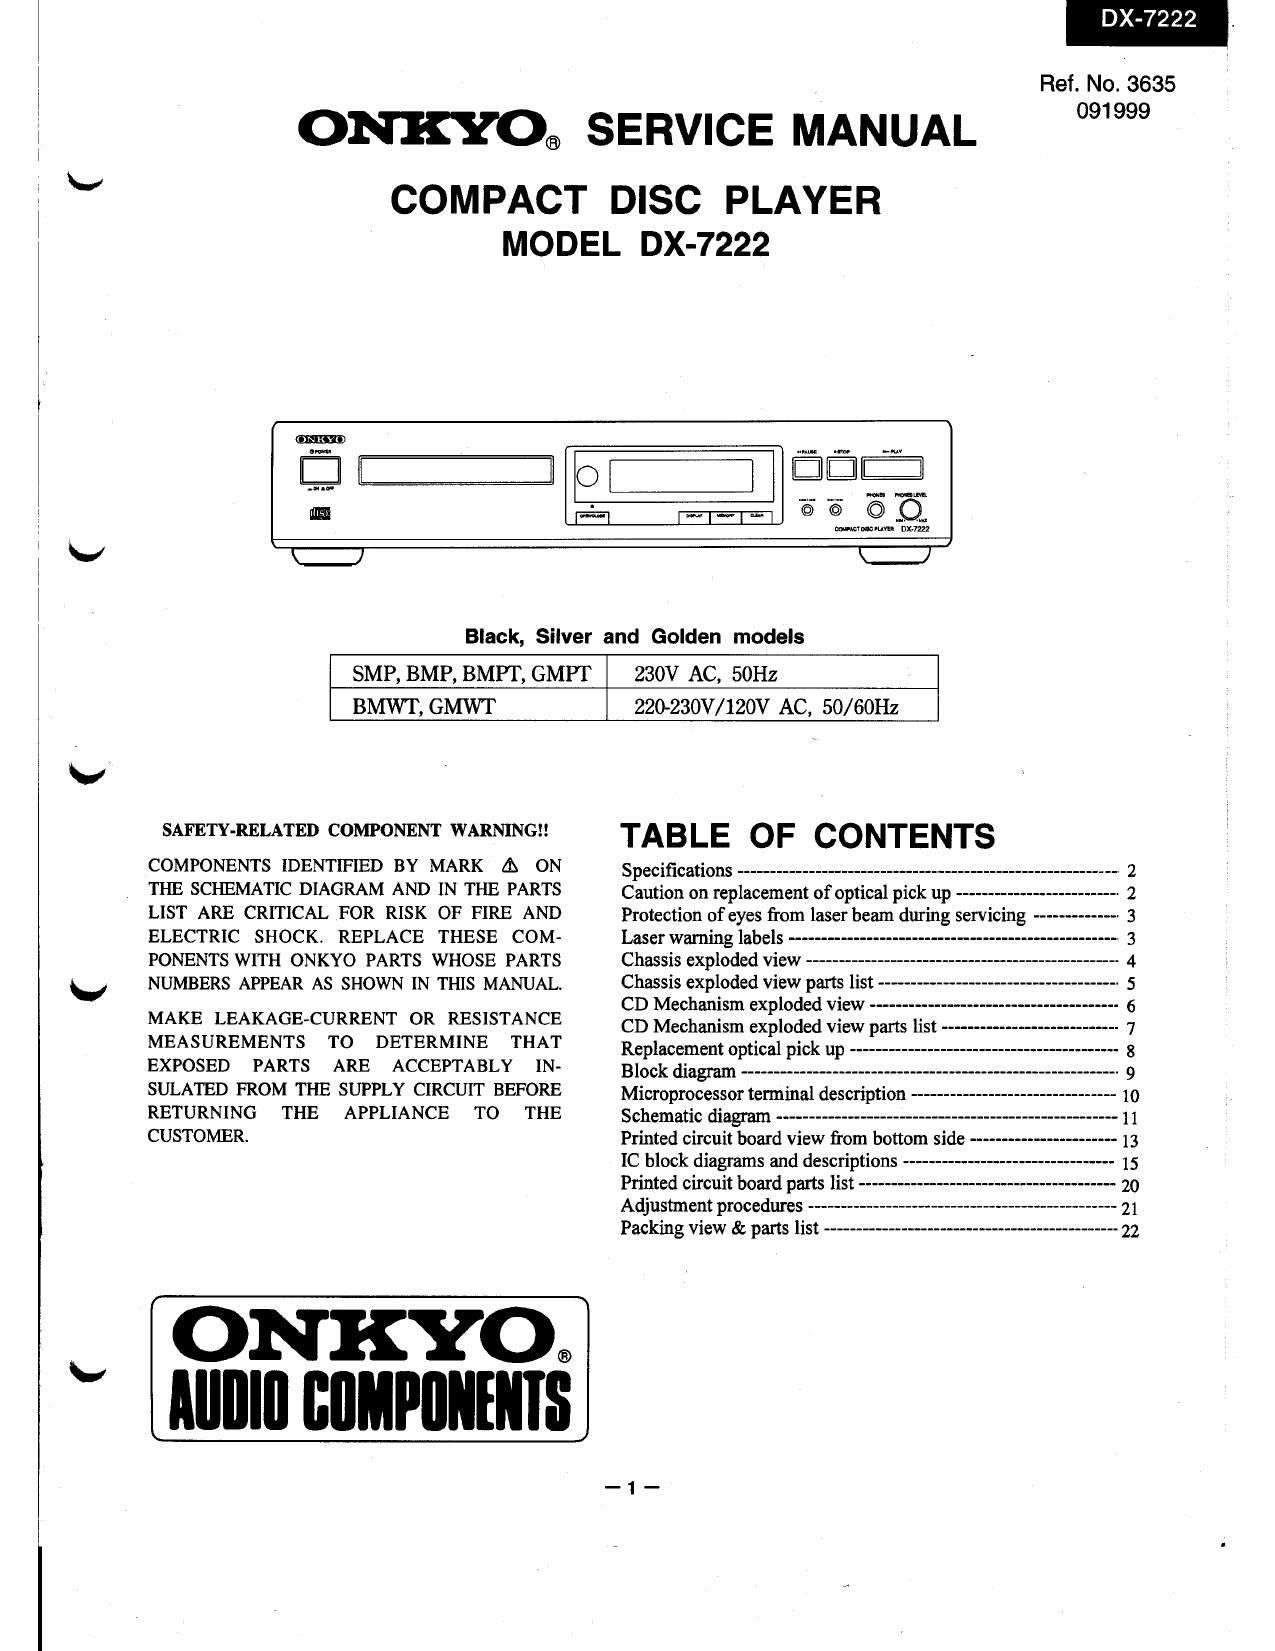 Onkyo DX 7222 Service Manual